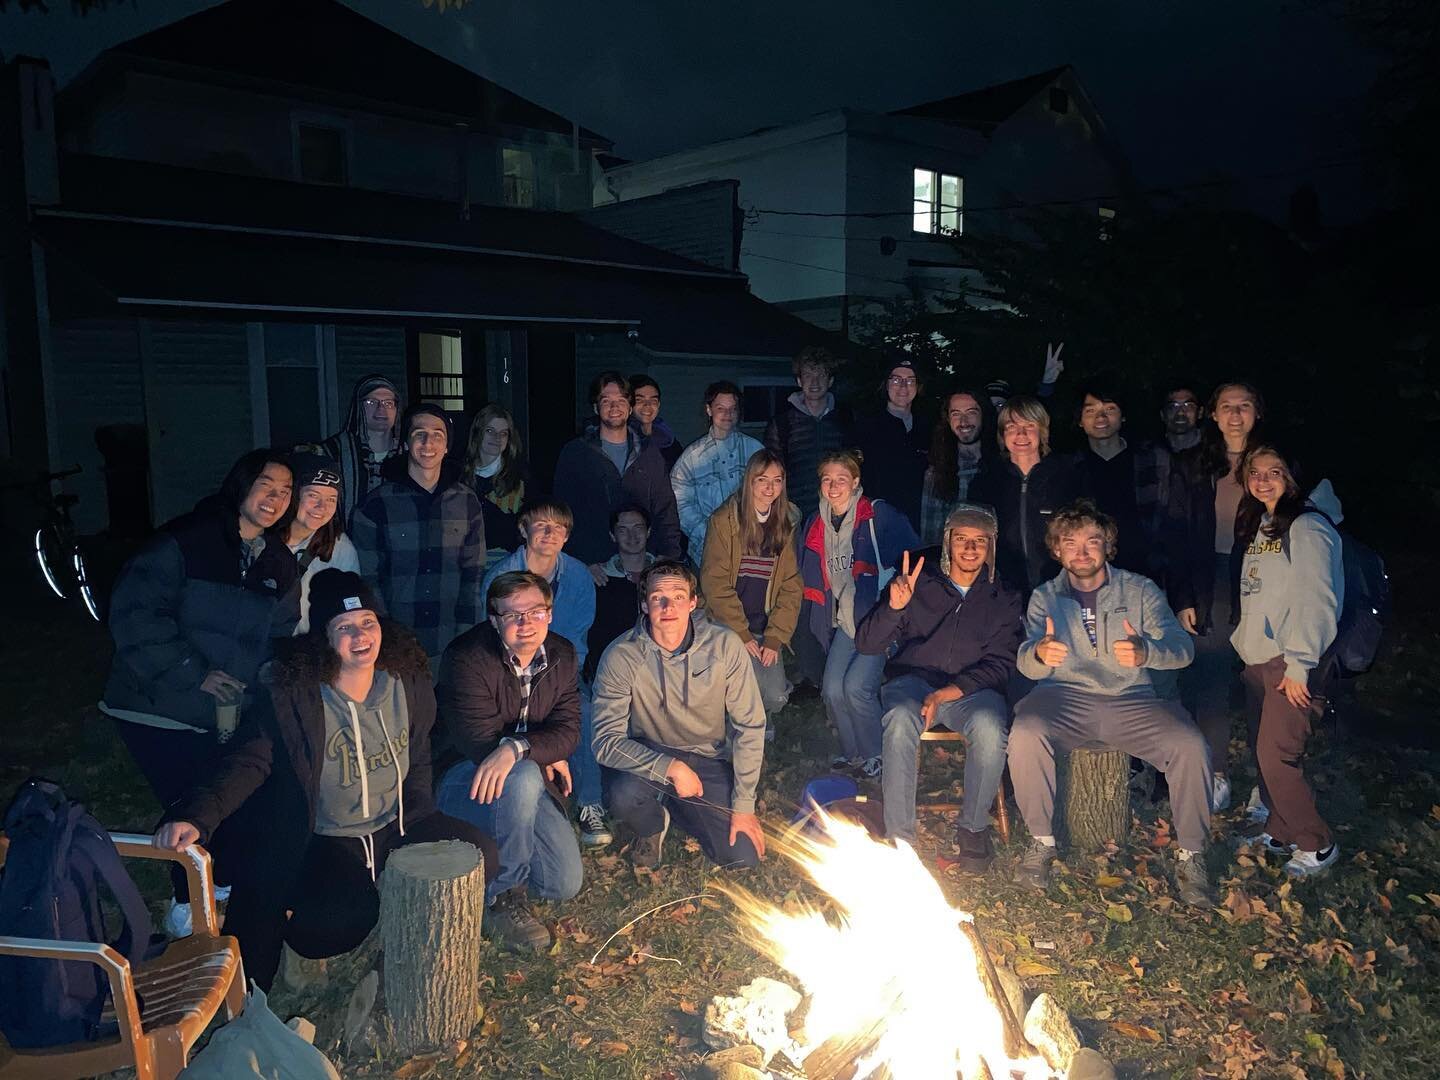 Last night&rsquo;s bonfire was a roaring success, let&rsquo;s do it again sometime!